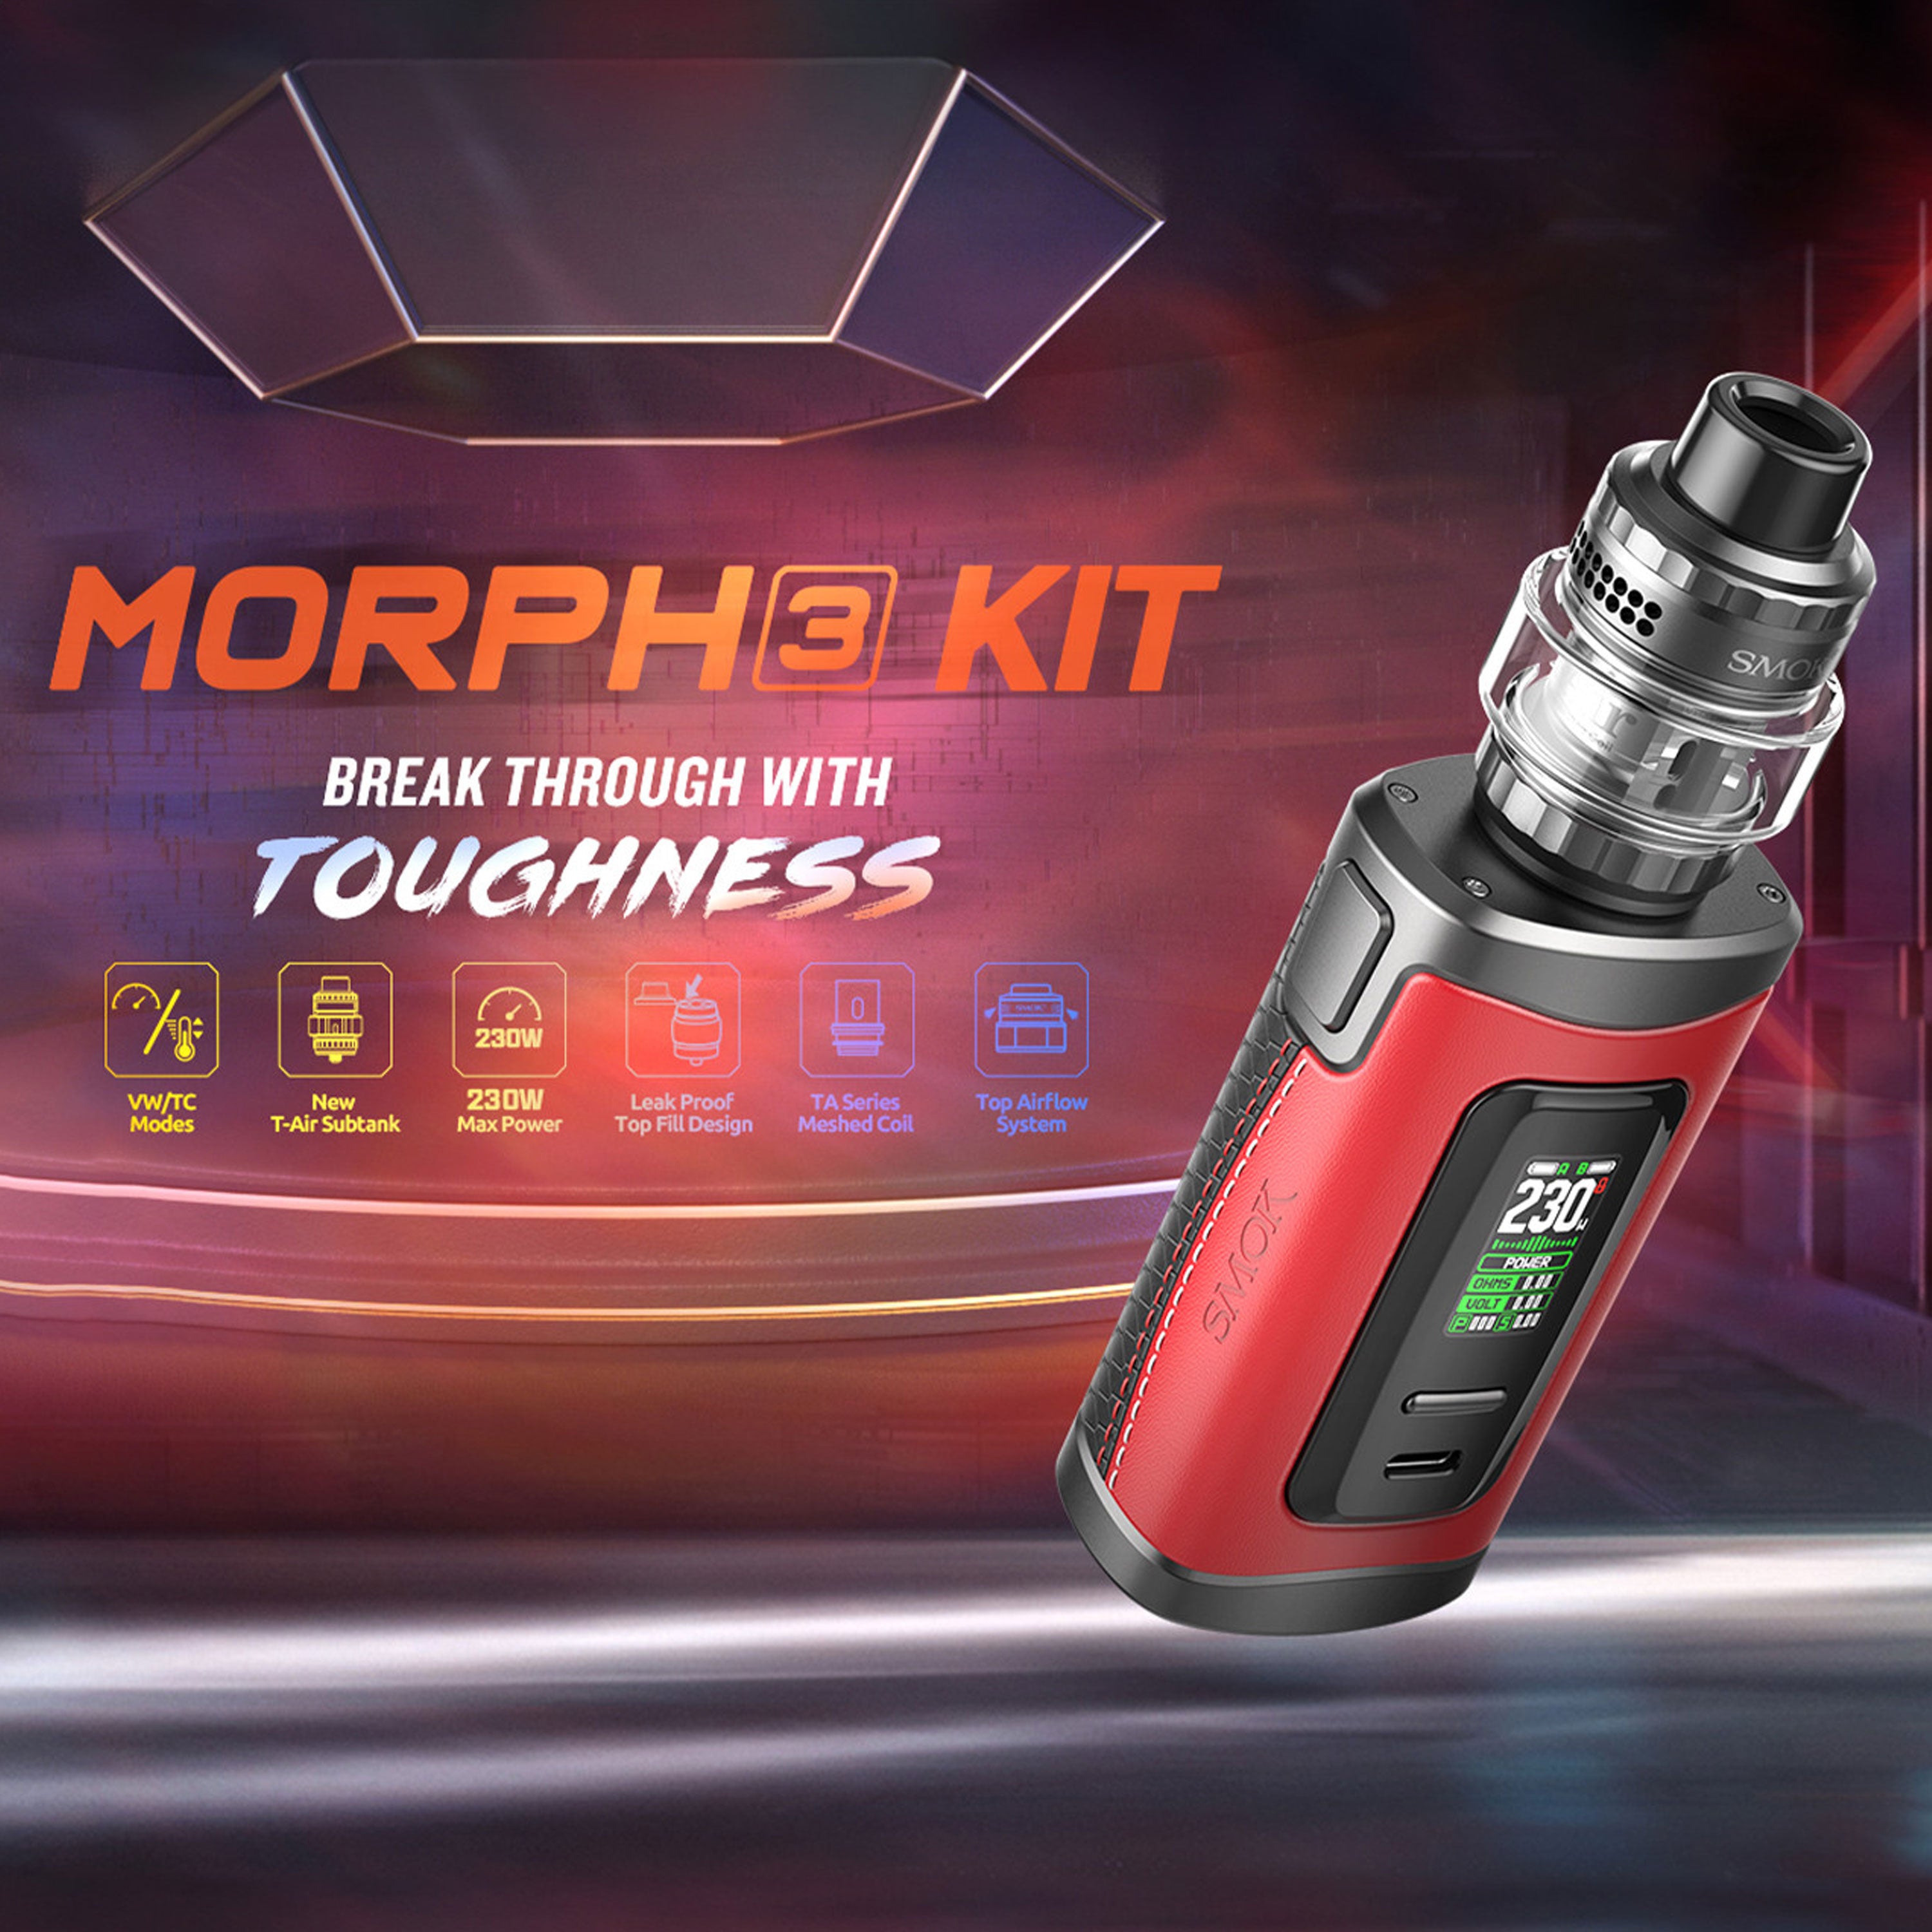 Smok - Morph 3 Kit inkl. T-Air Tank (5 ml) - E-Zigarette